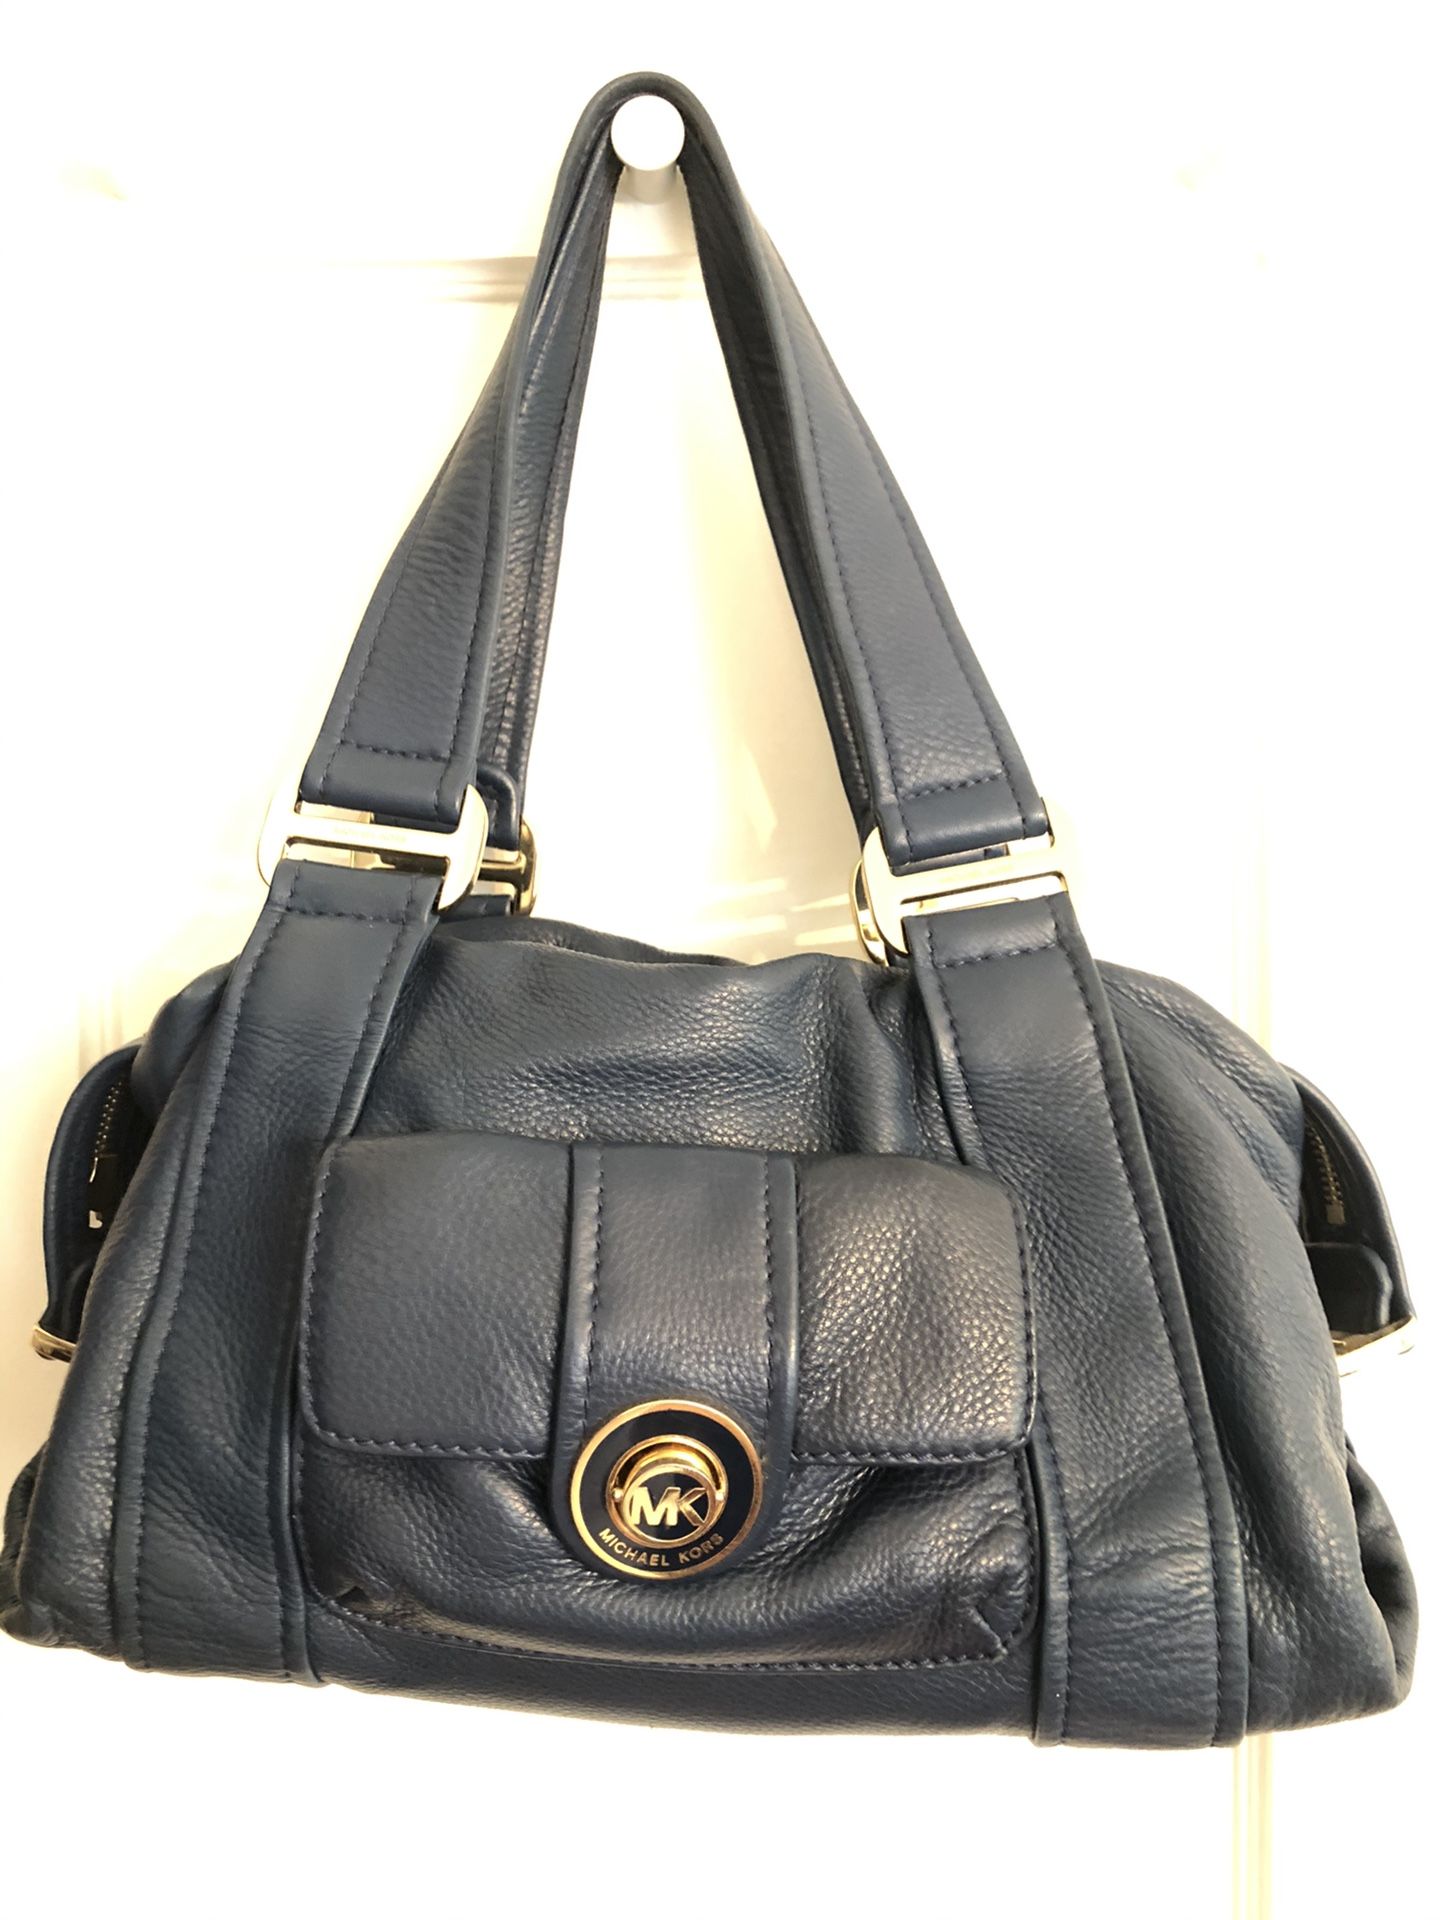 Michael Kors Purse Handbag Tote - Navy Blue - Leather - Excellent Condition!